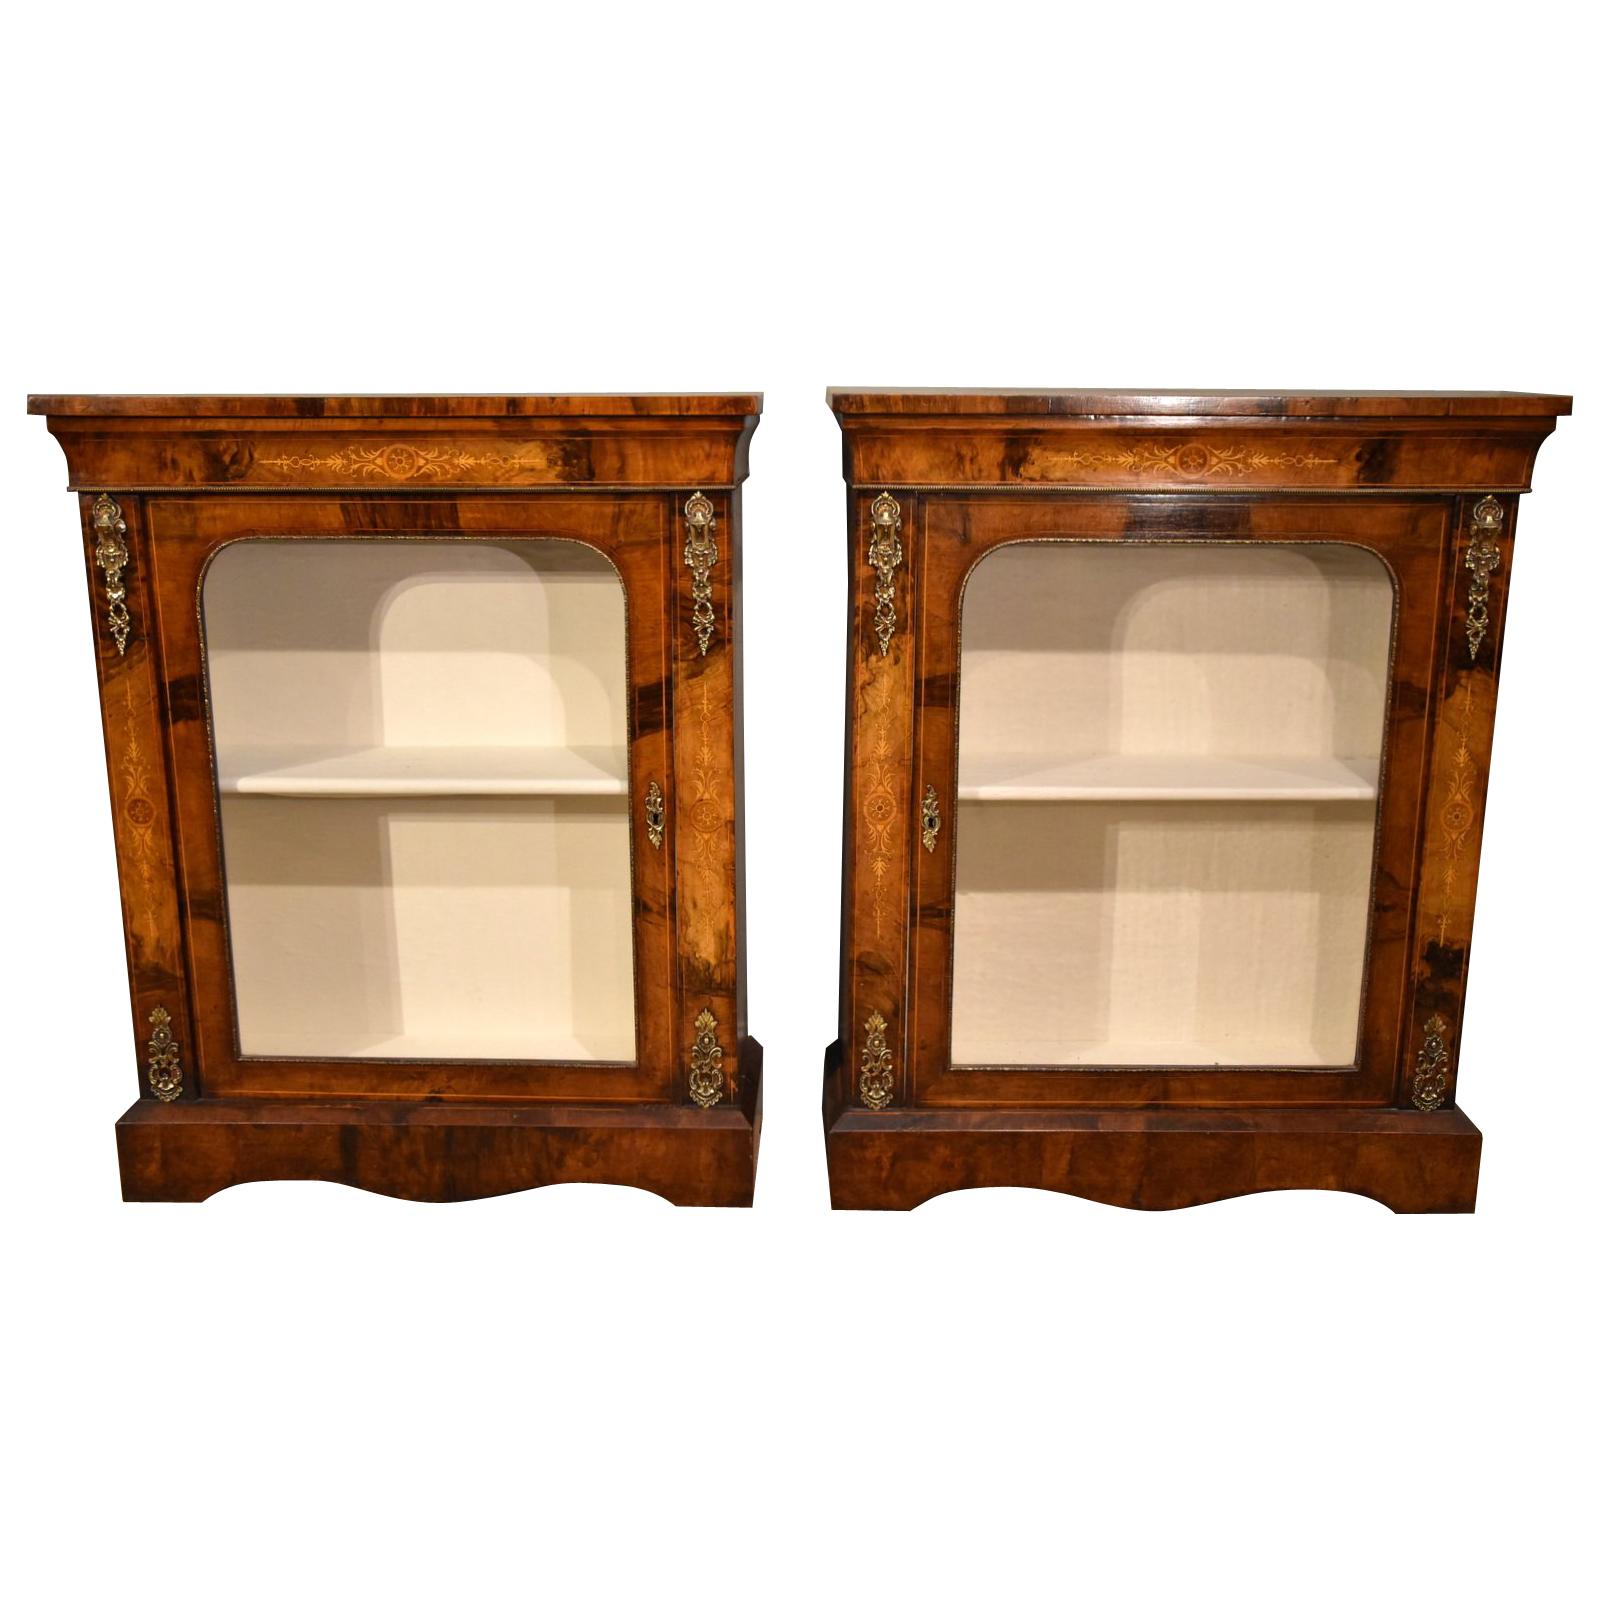 Exquisite Pair of Inlaid Walnut Brass Pier Cabinets